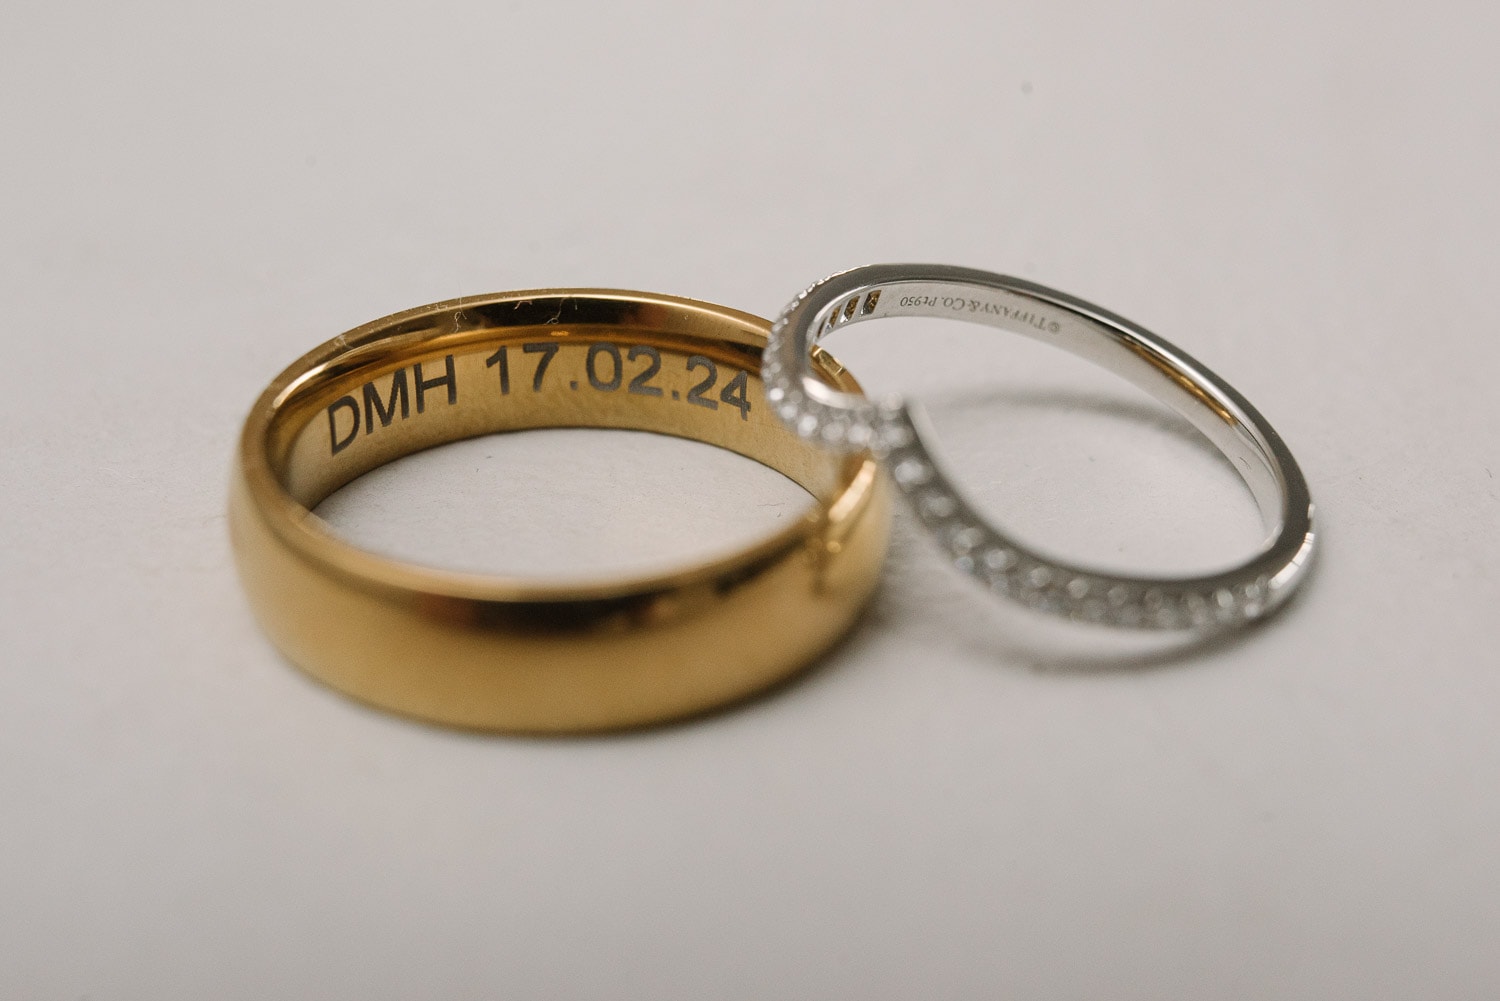 Wedding rings 17022024